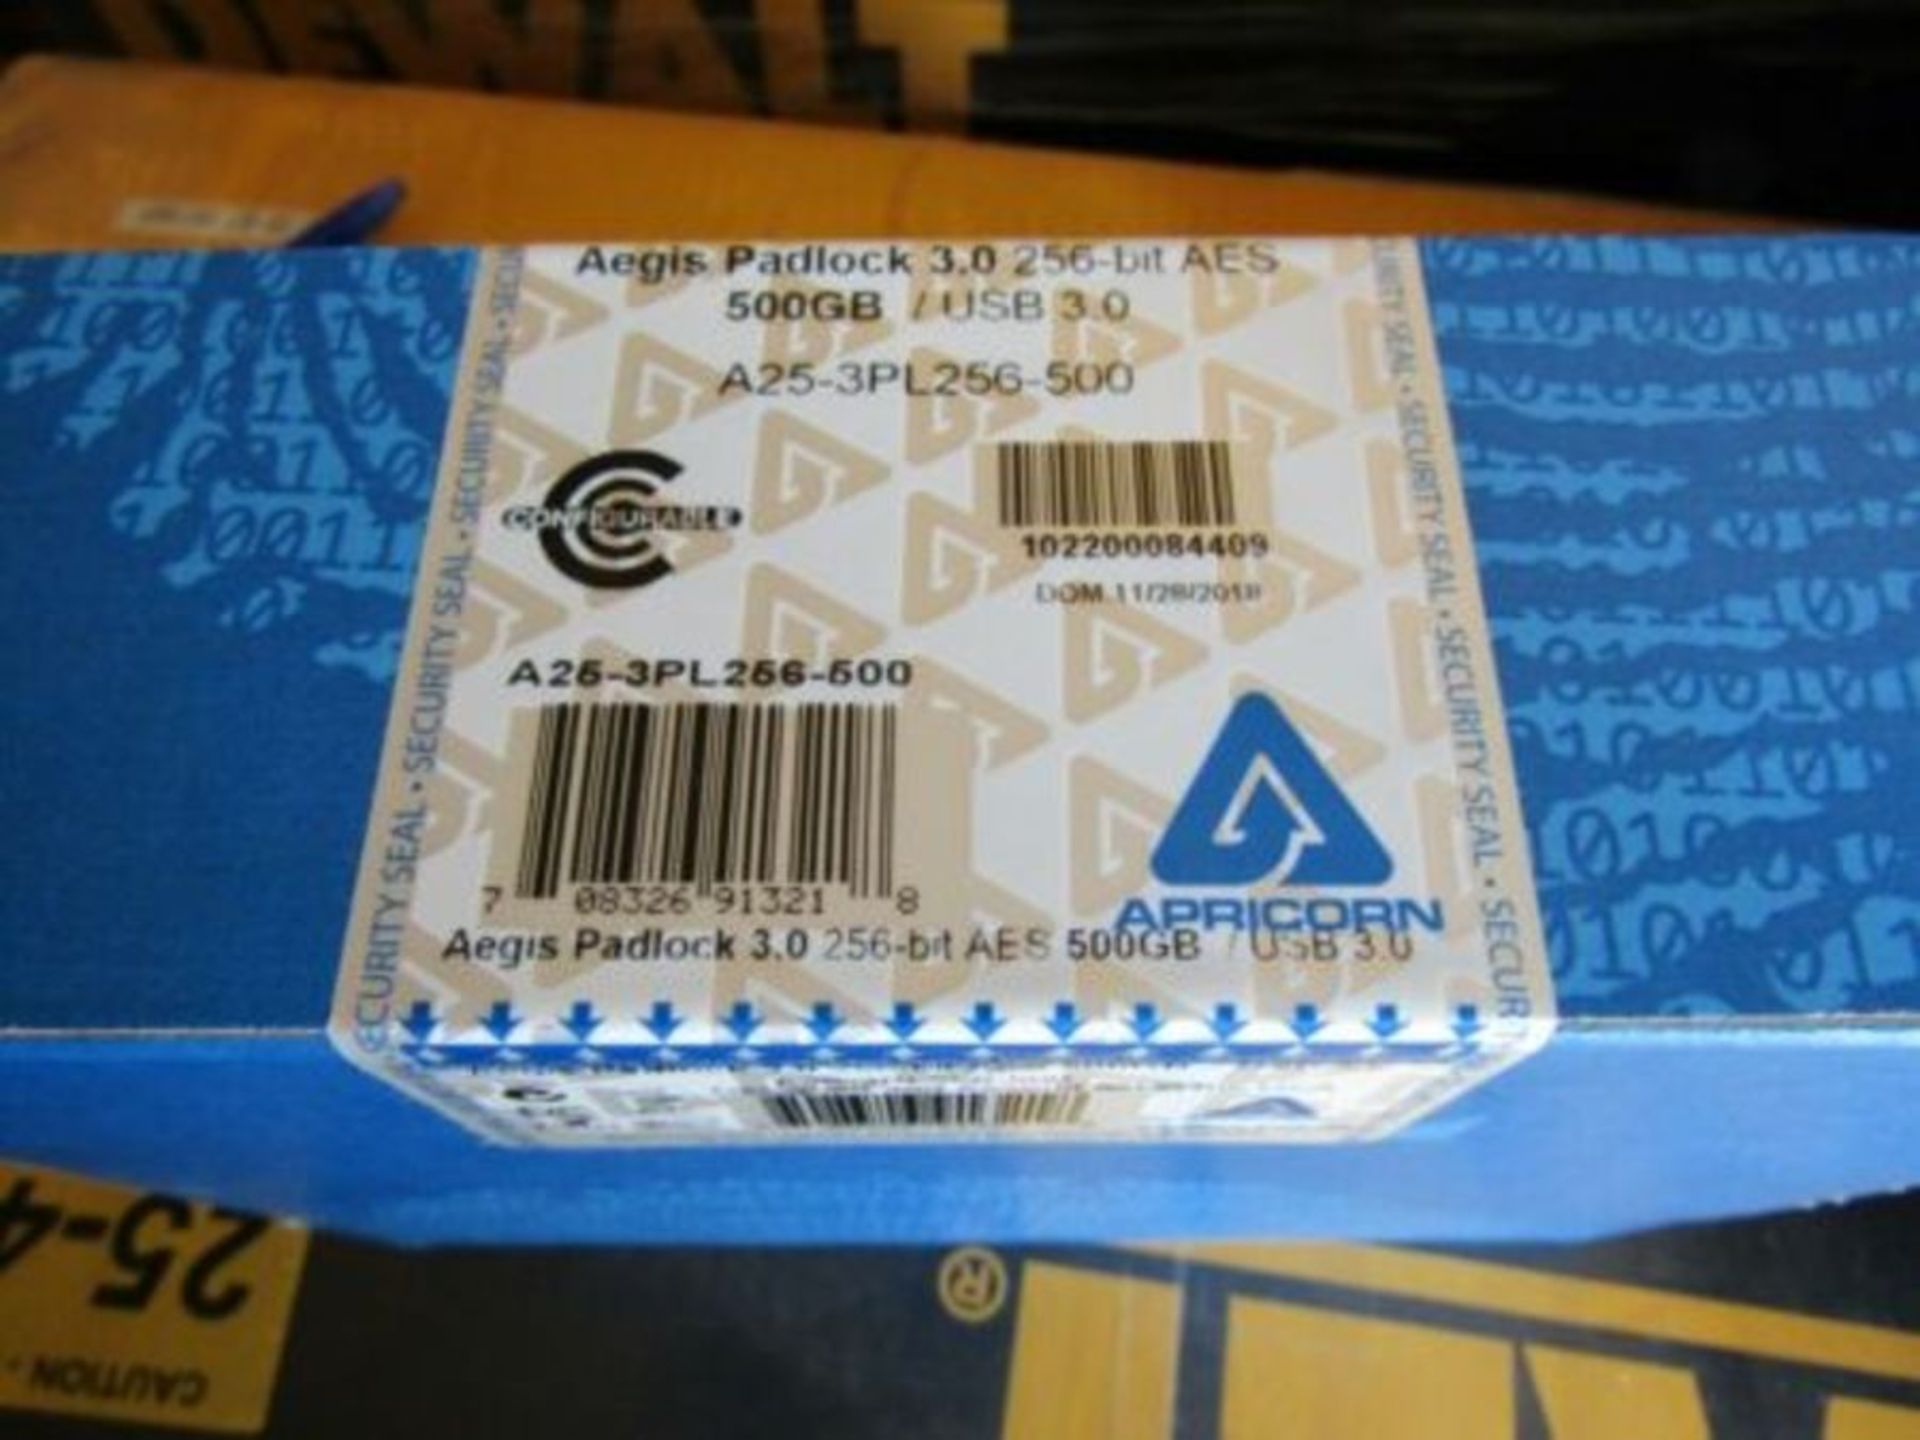 5 x Apricorn Aegis Bio 3 500 GB Portable Hard Drive A25-3PL256-500 £120 each on ebay BL1 1465560 - Image 4 of 4